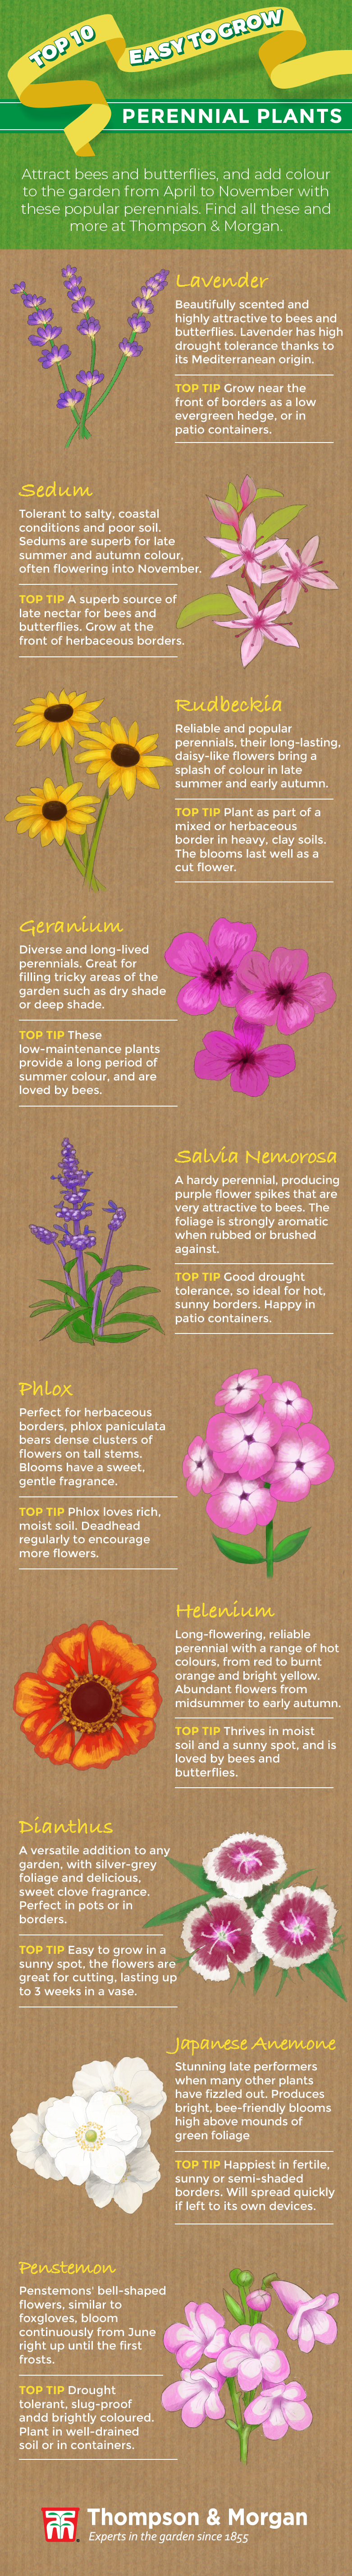 top 10 perennial plants | thompson & morgan